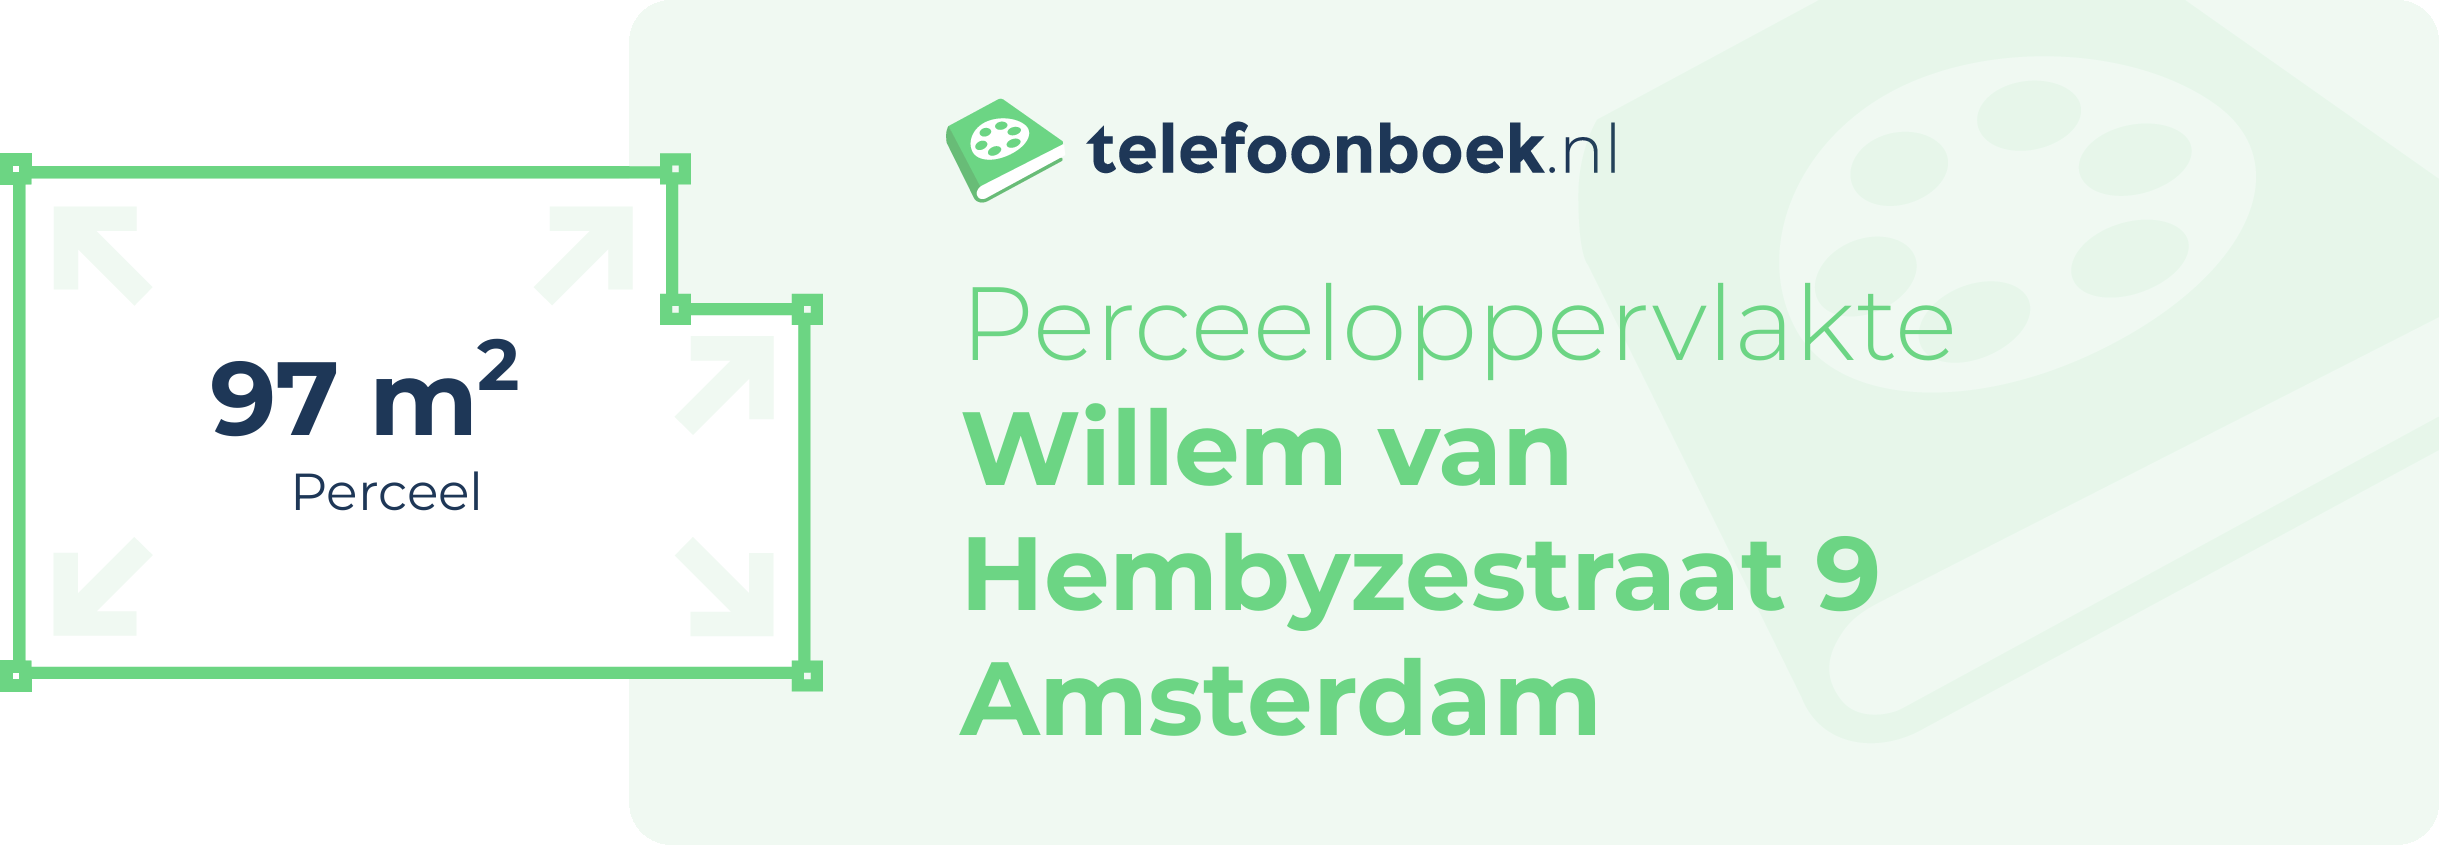 Perceeloppervlakte Willem Van Hembyzestraat 9 Amsterdam